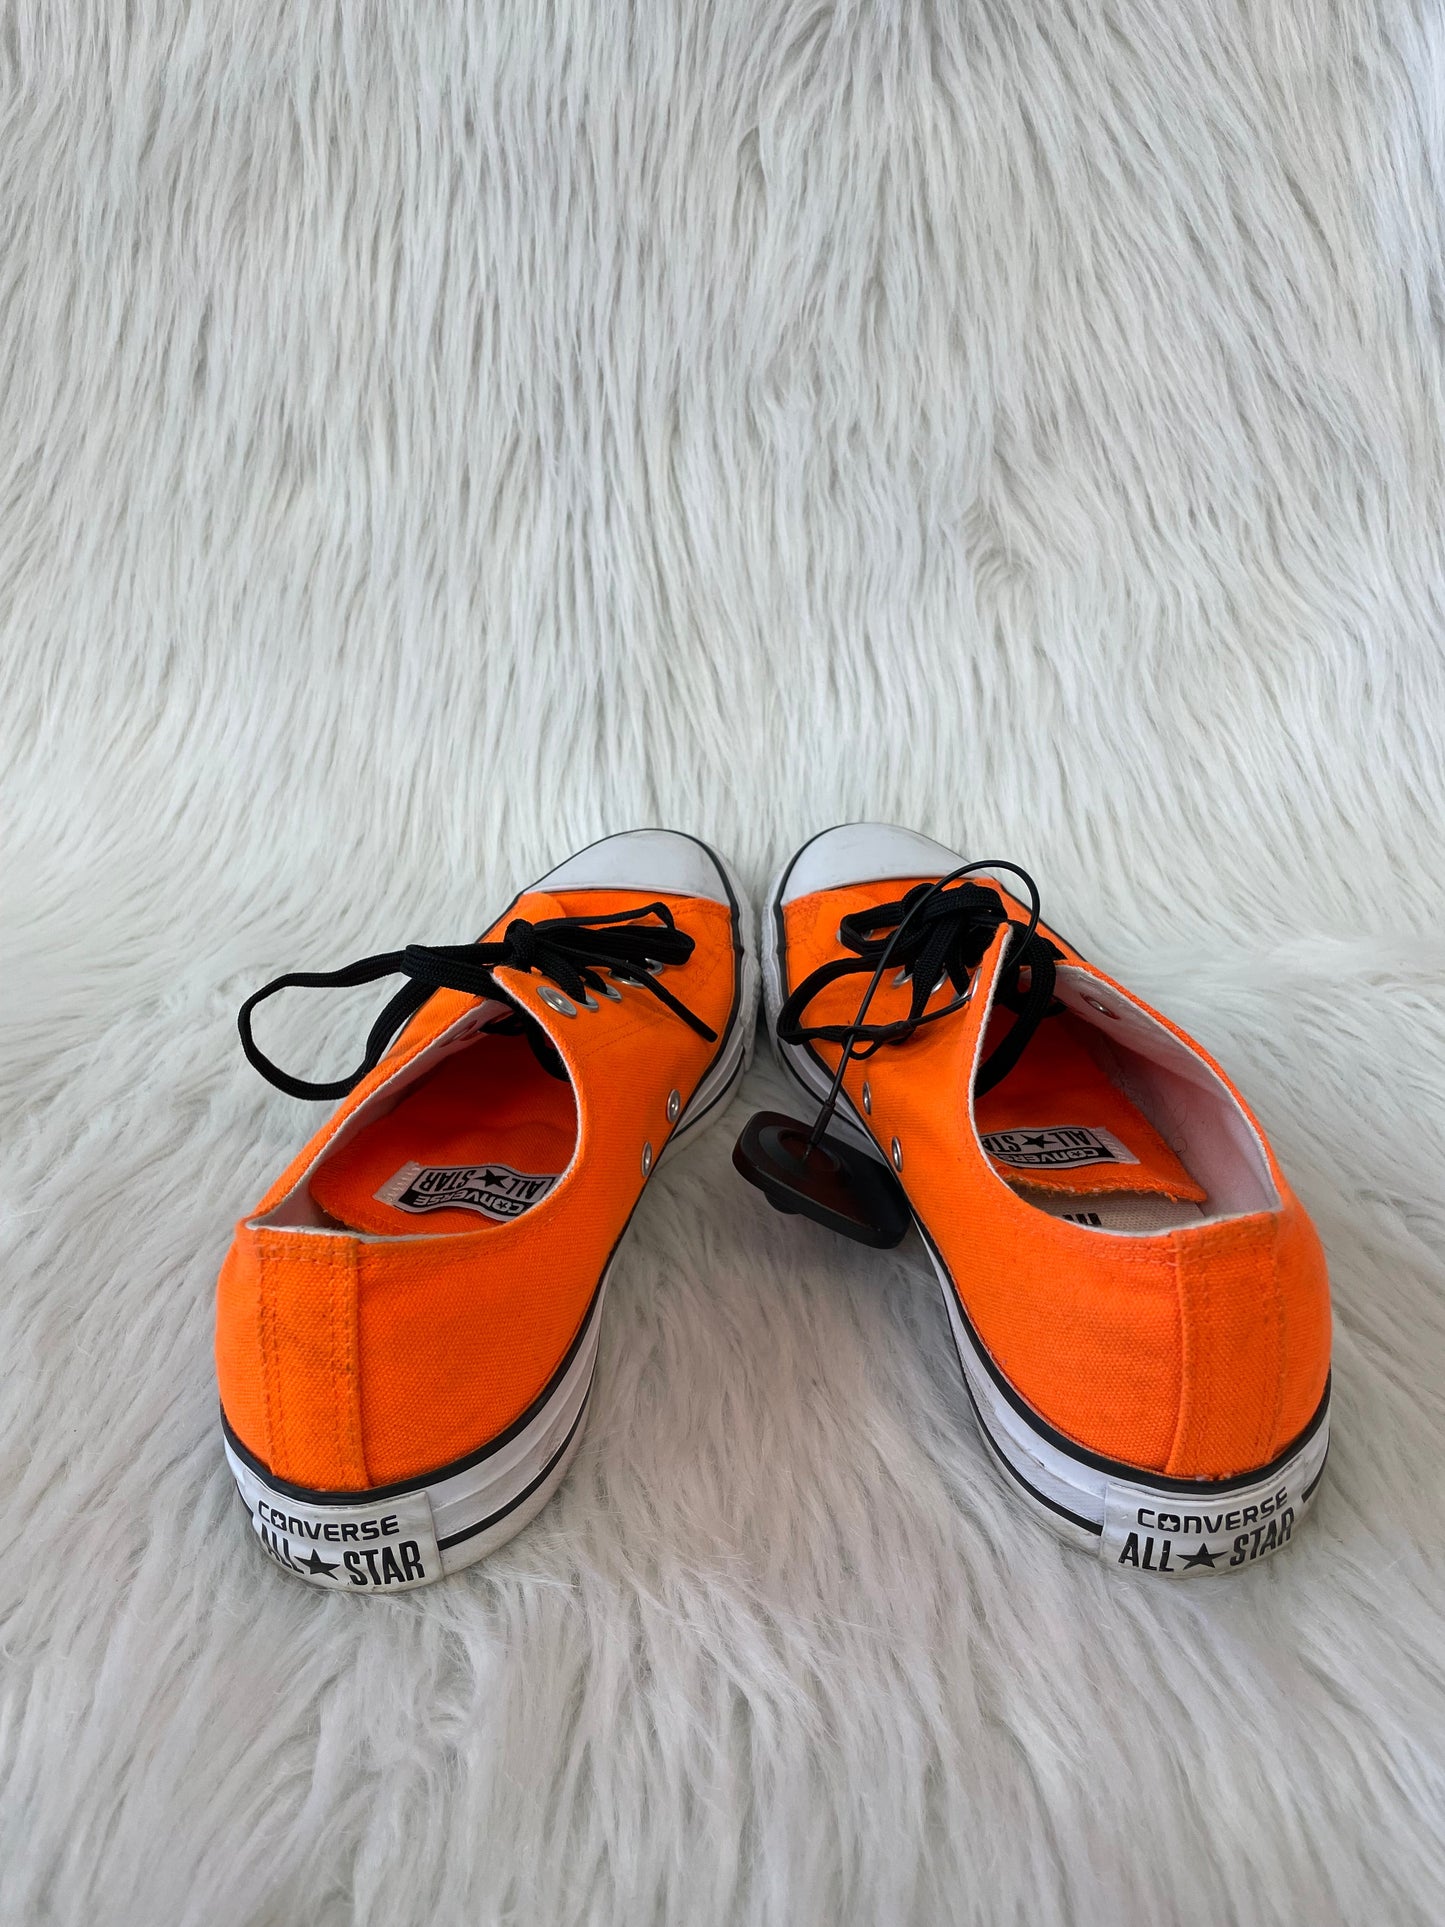 Black & Orange Shoes Sneakers Converse, Size 10